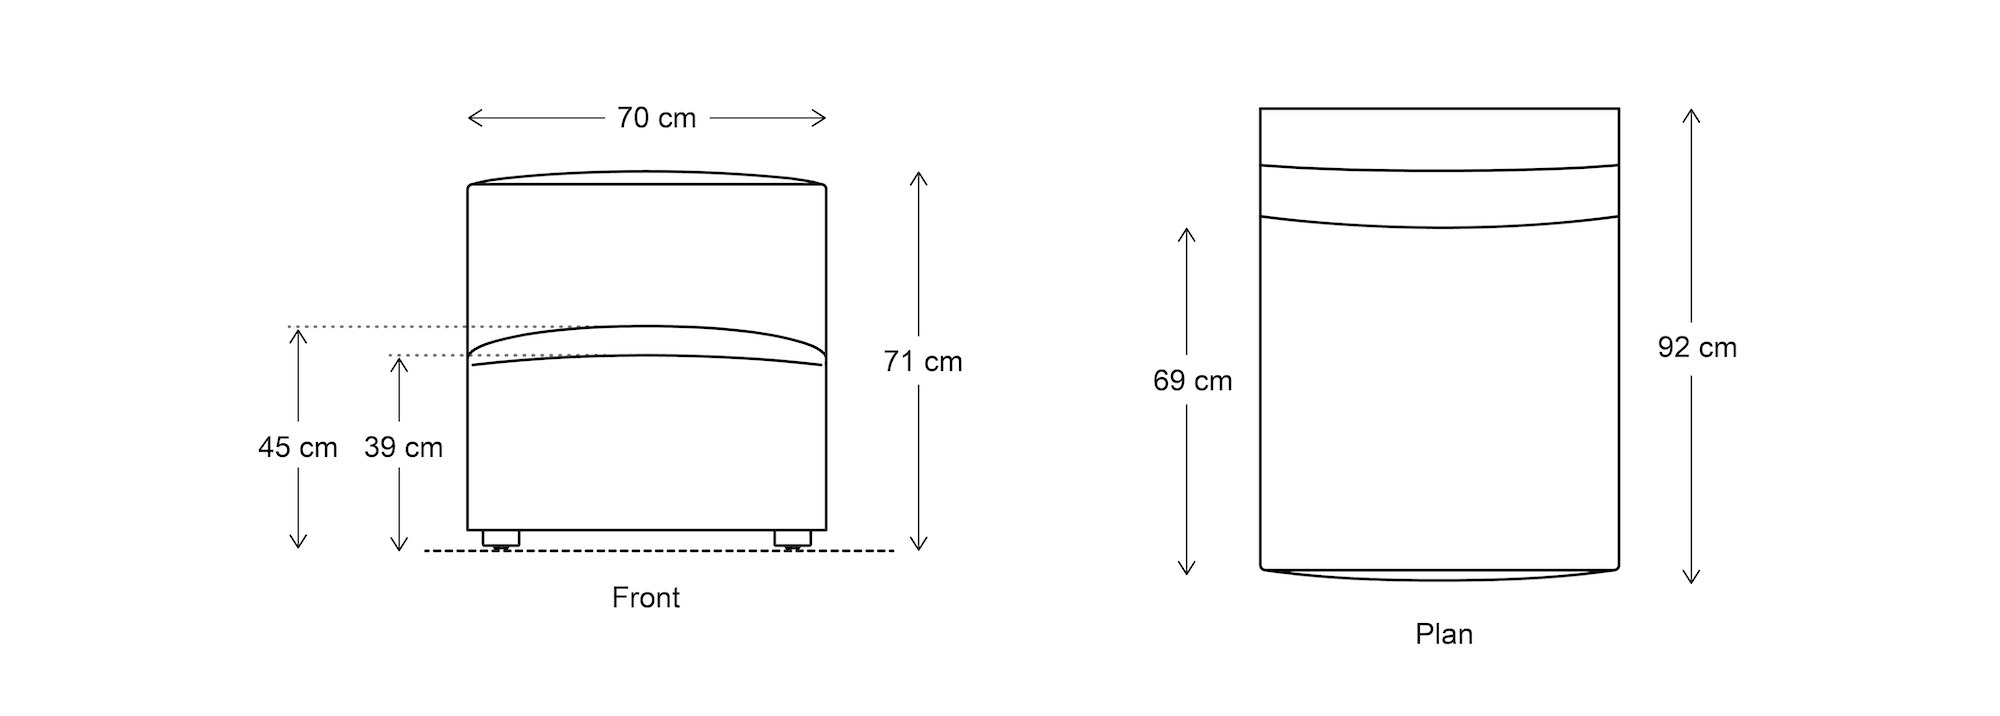 Modular seat module sofa dimensions